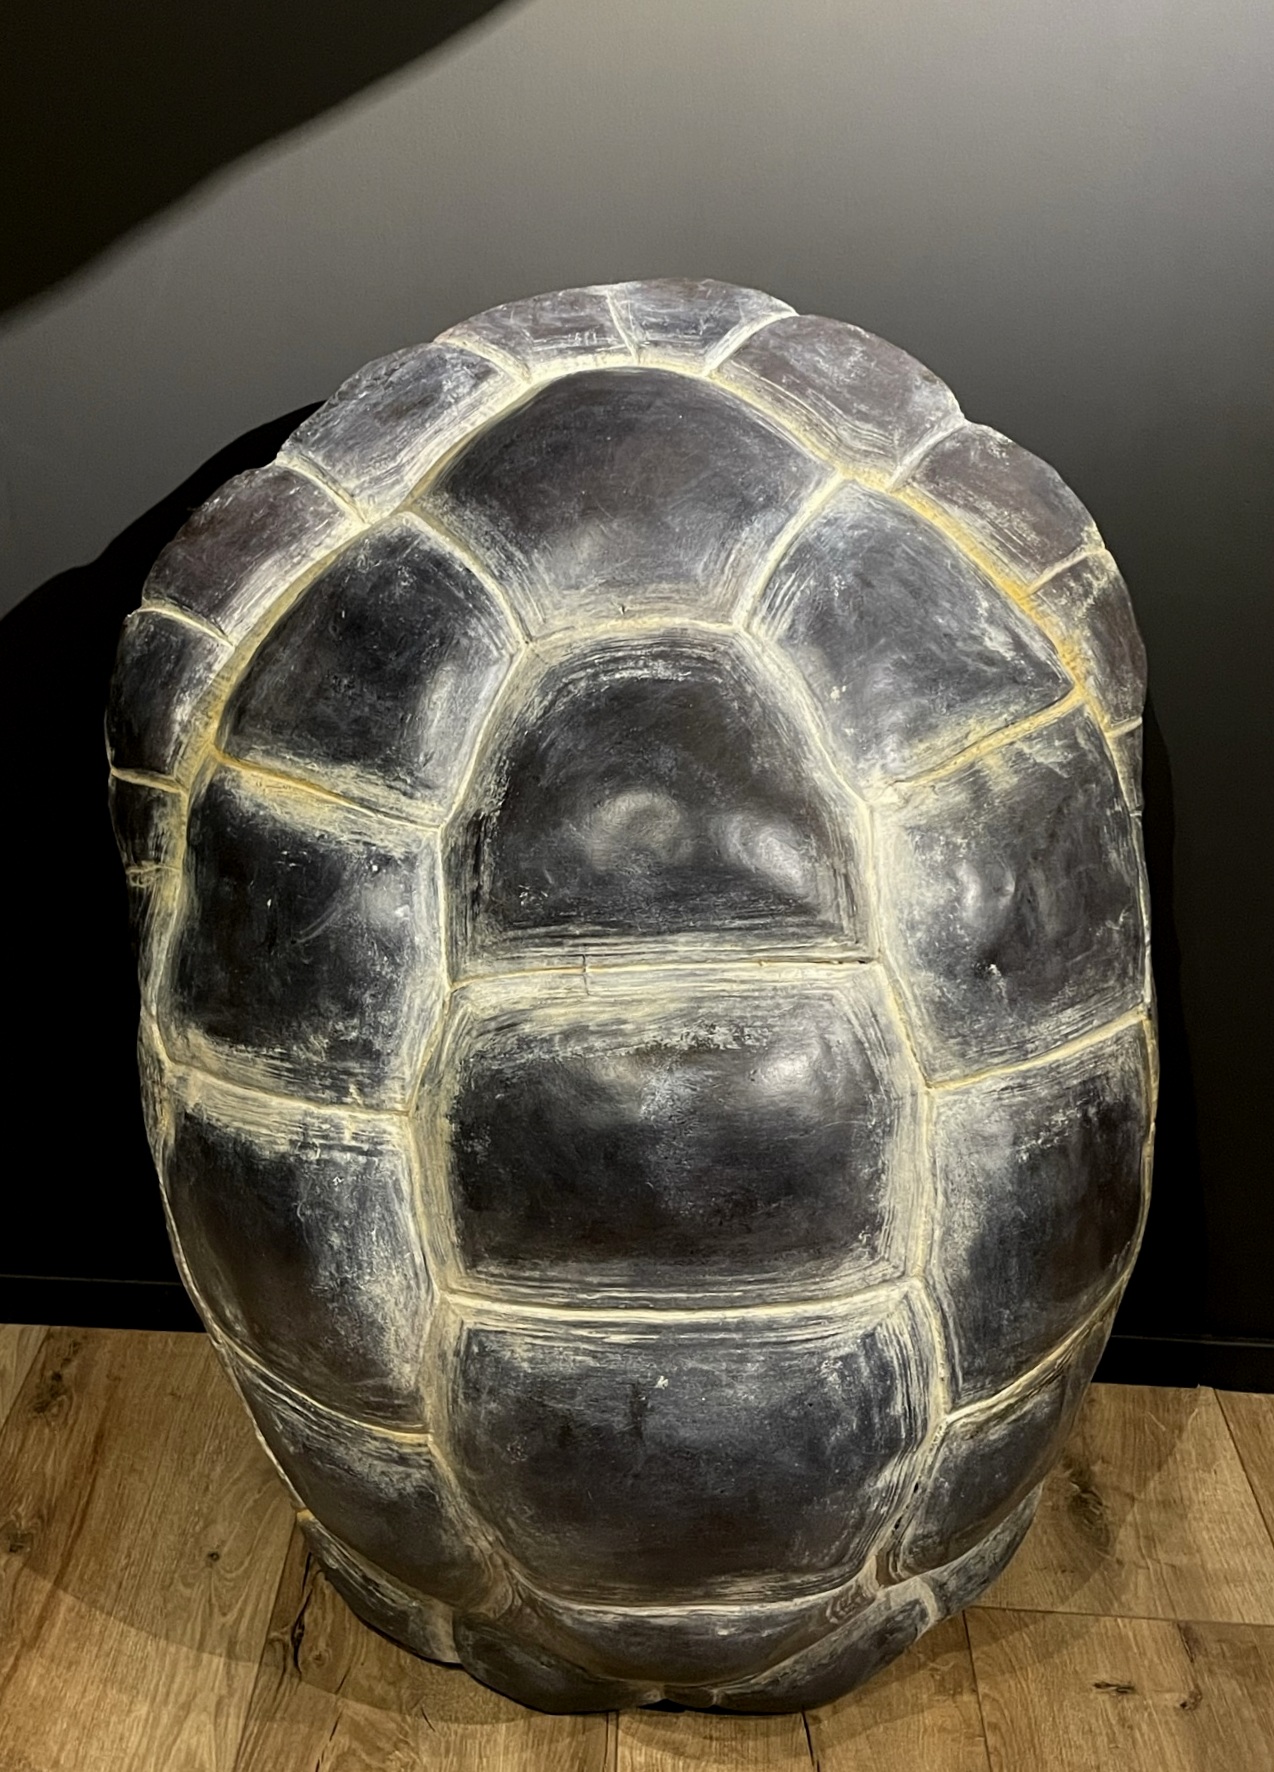 European Standard Tortoise Shape Stainless Steel Isoleerkan